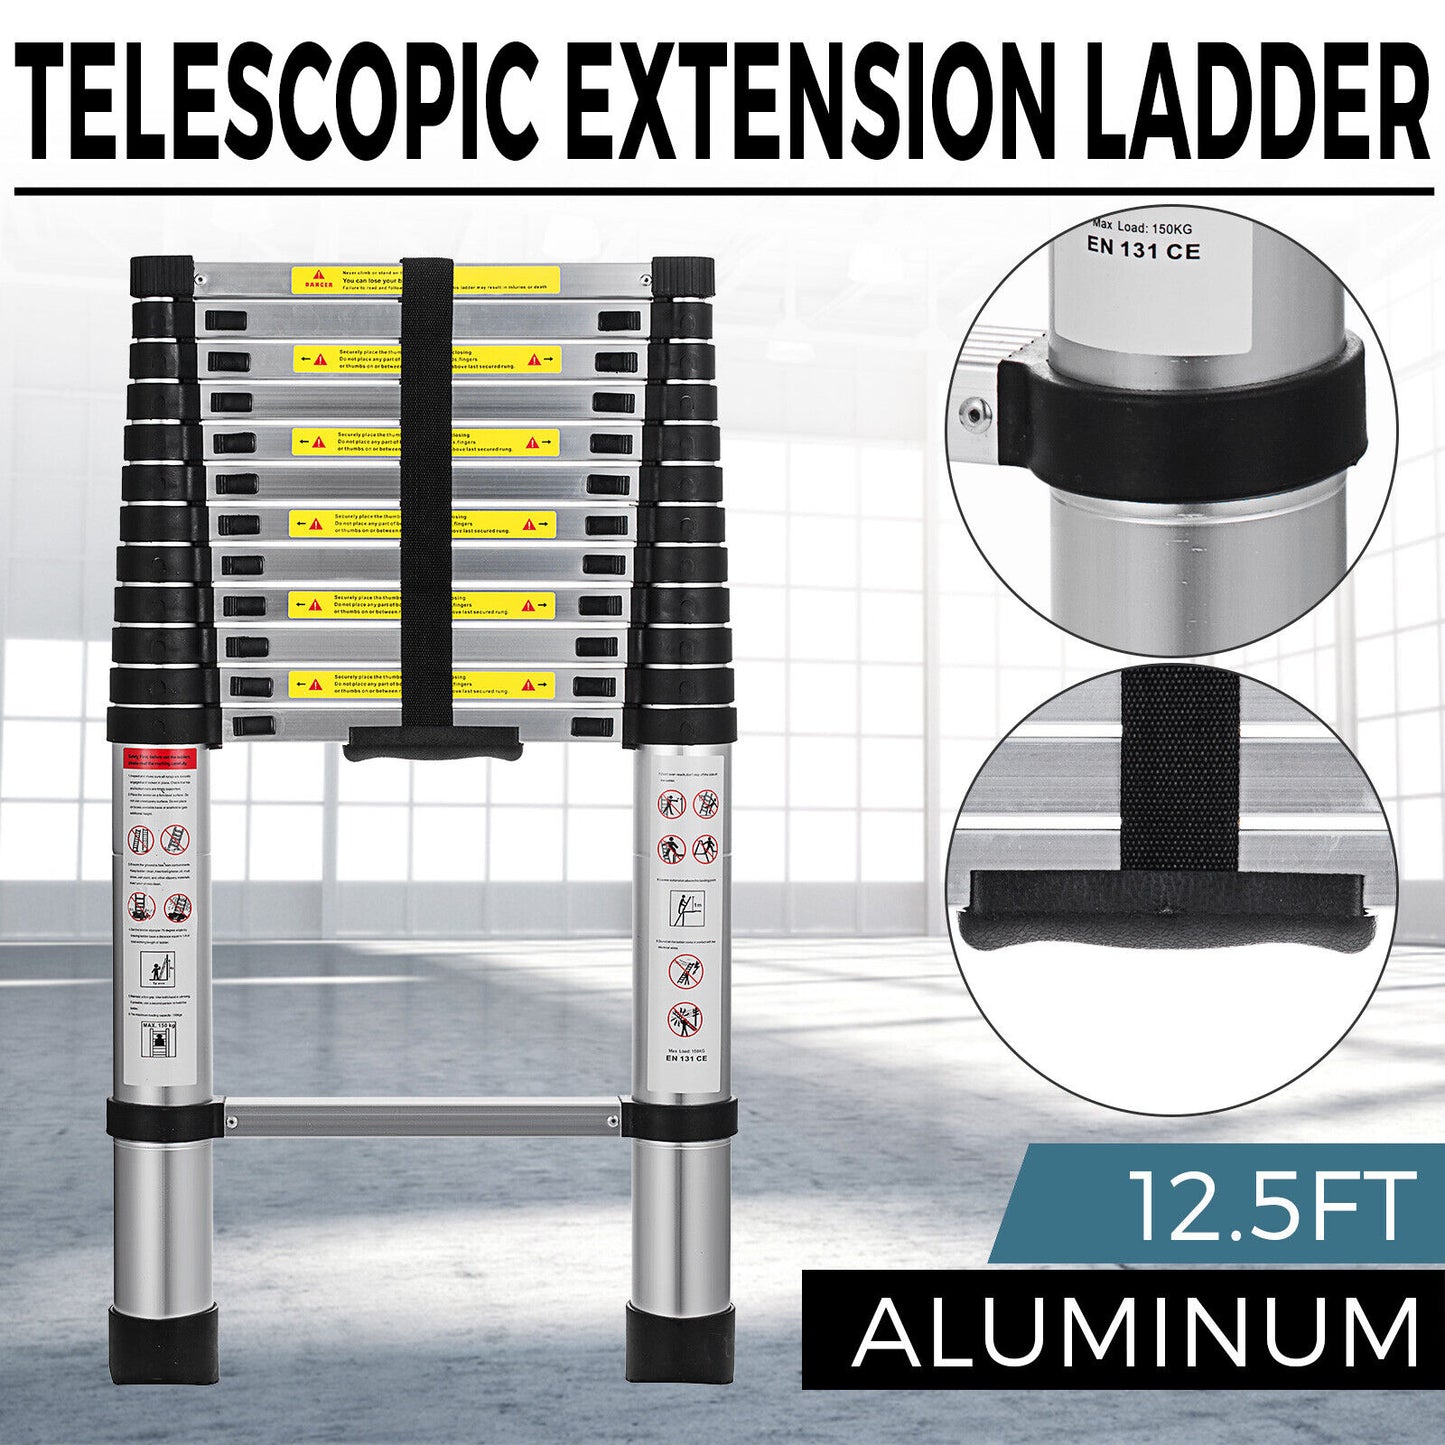 Telescoping Ladder 12.5 FT One Button Retraction Aluminum Telescopic Extension